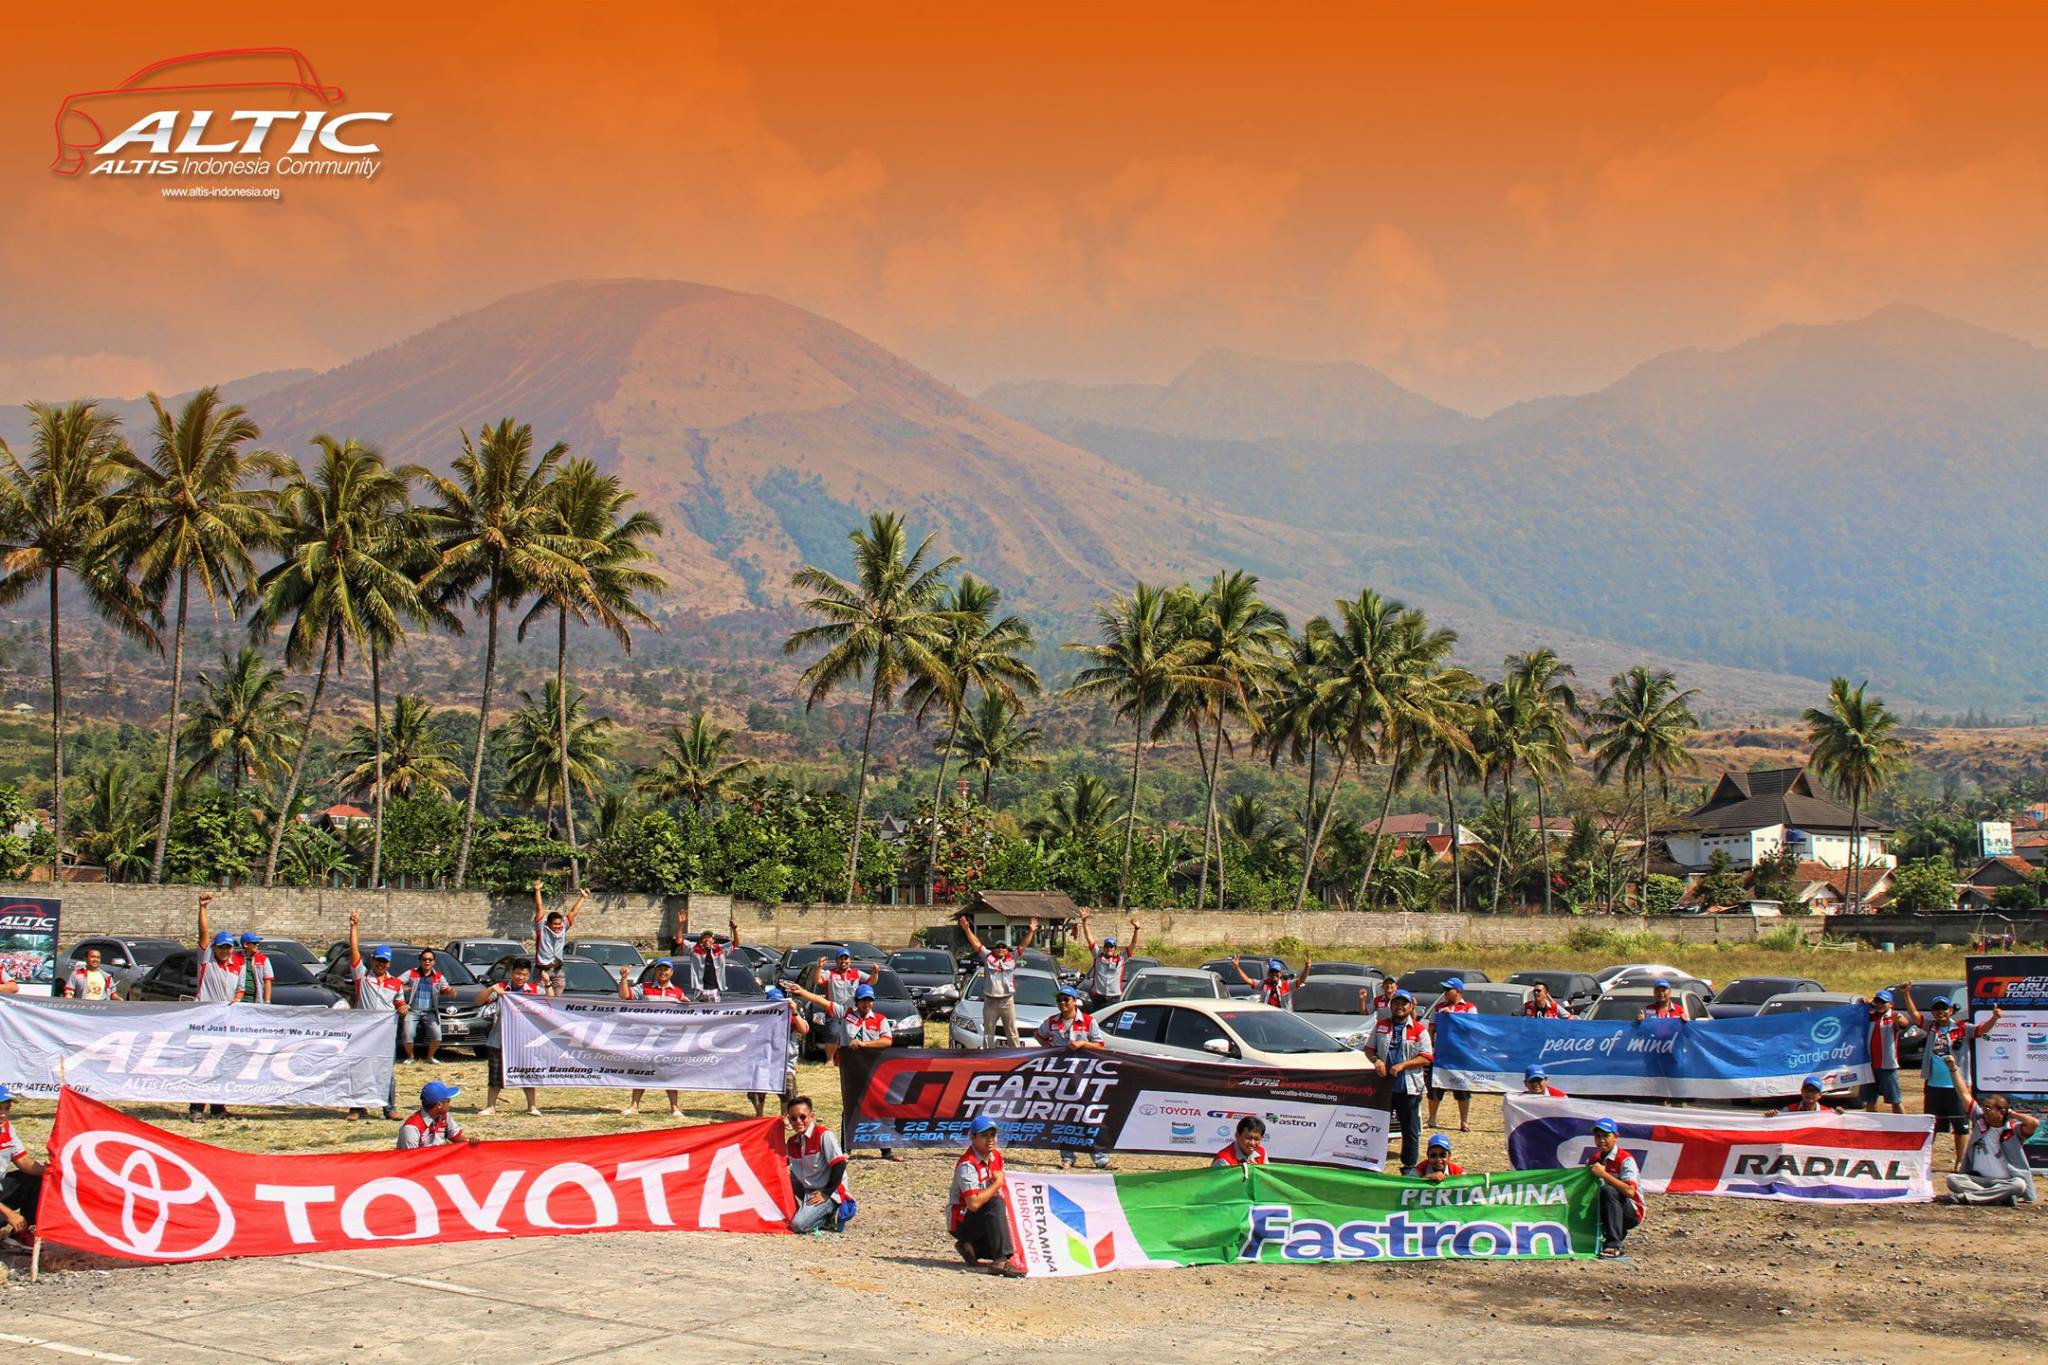 Toyota Astra Motor Indonesia - ALTIC Garut Touring 2014